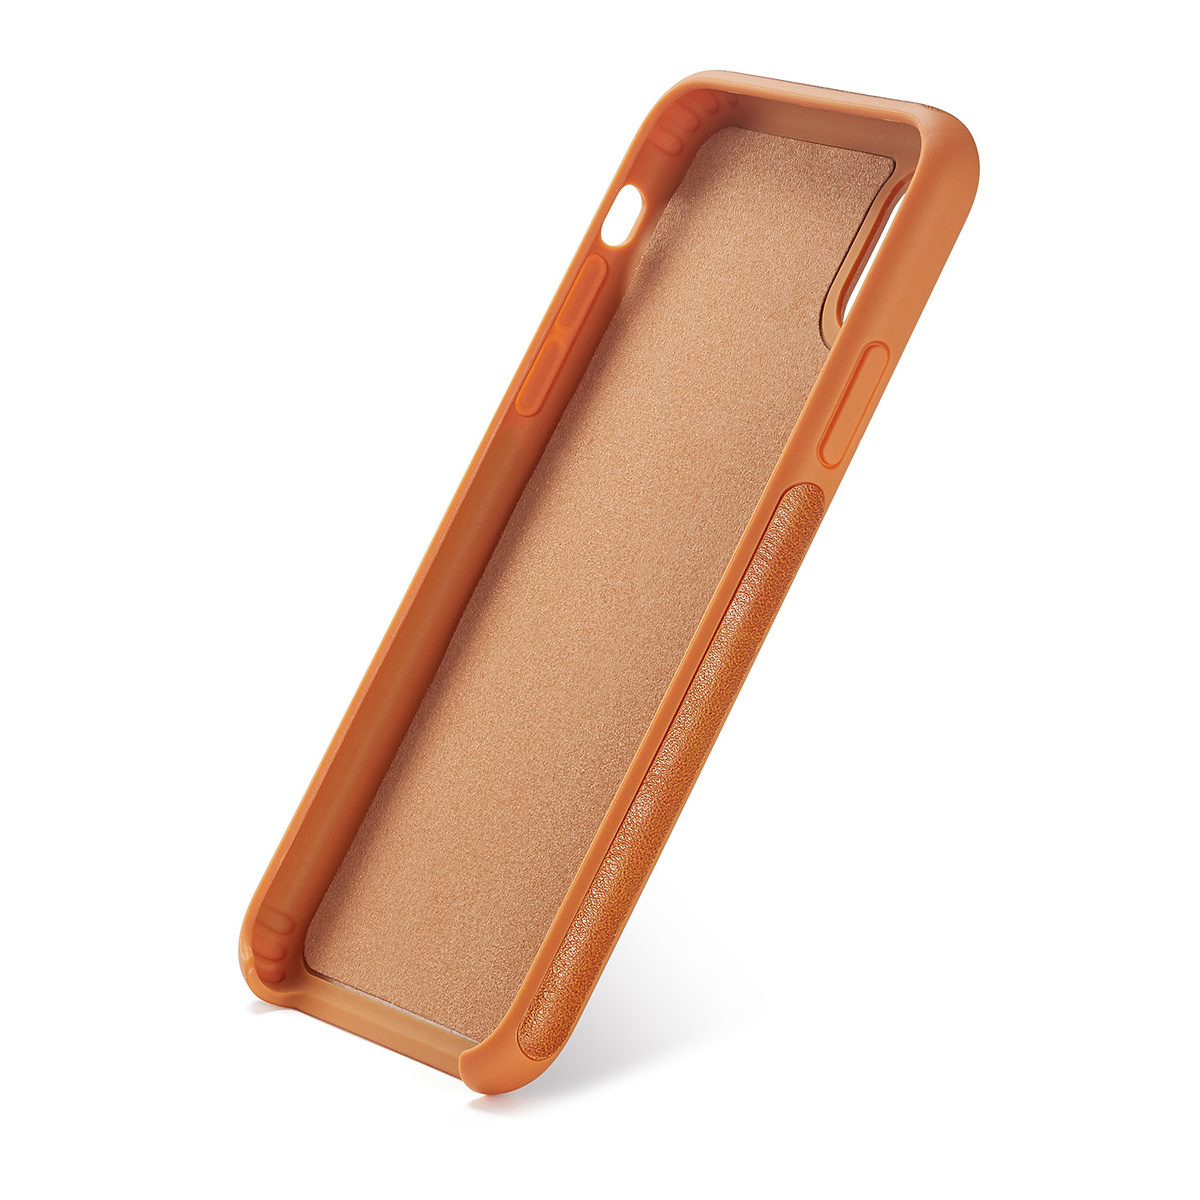 BRG Luxury plånboksfodral med ställ, iPhone XS Max, brun